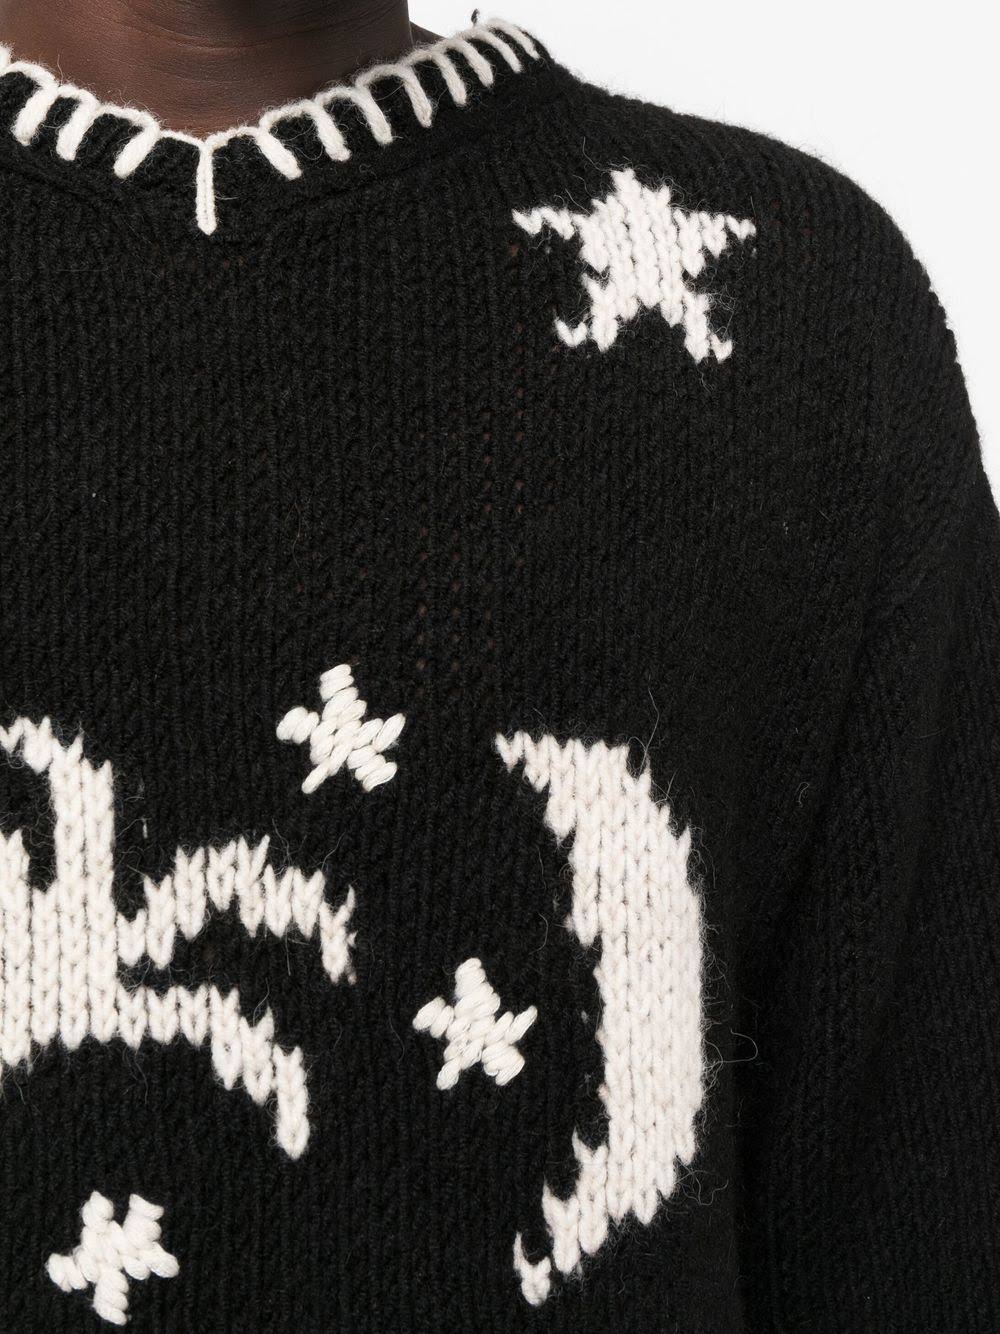 Palm Angels Black Wool Sweater